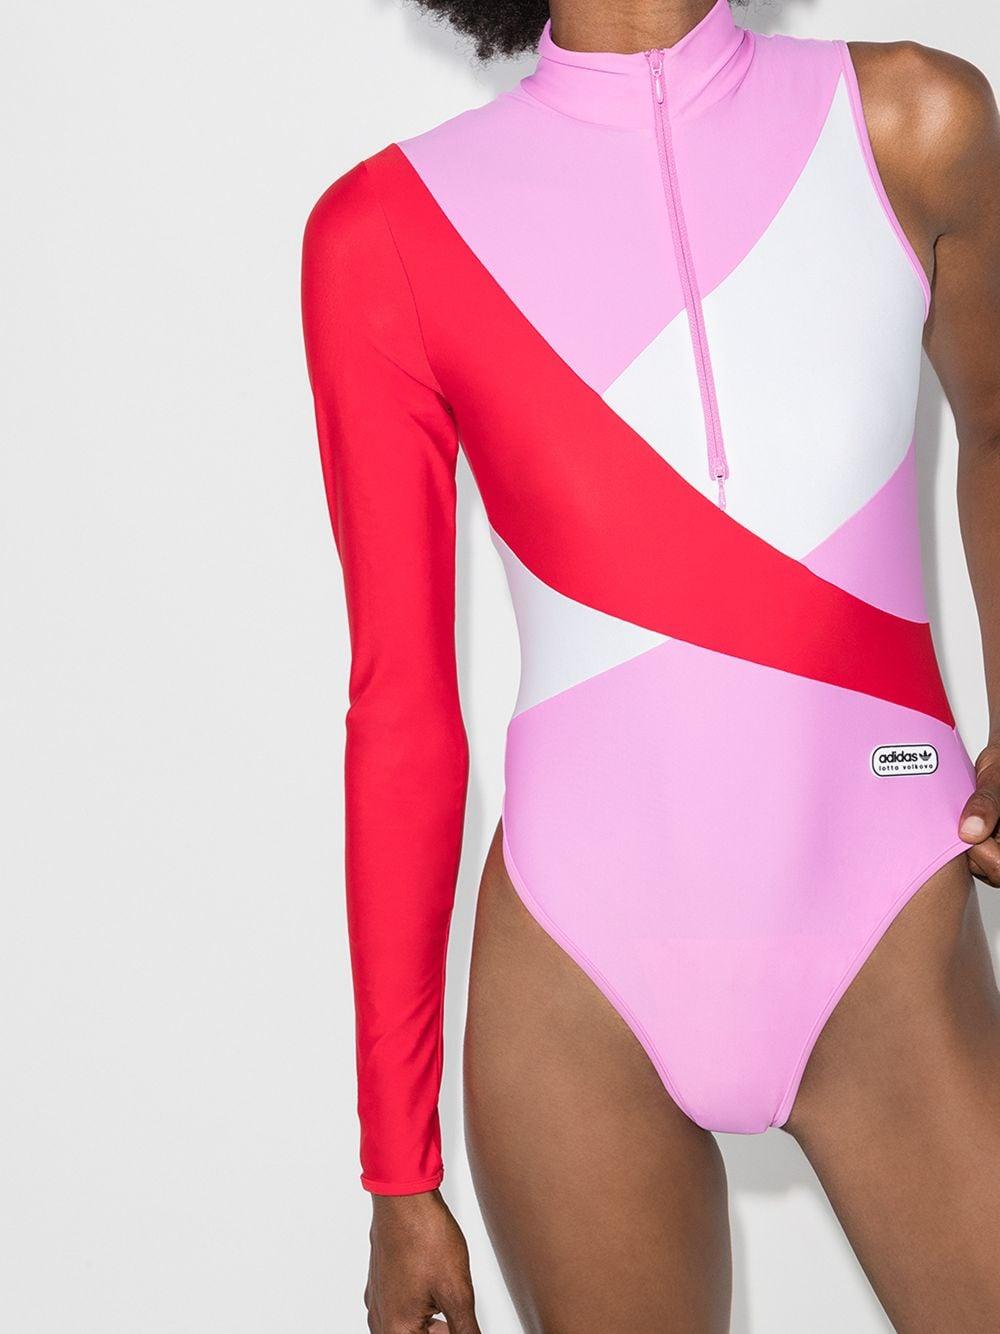 adidas X Lotta Volkova One Sleeve Swimsuit in Pink | Lyst